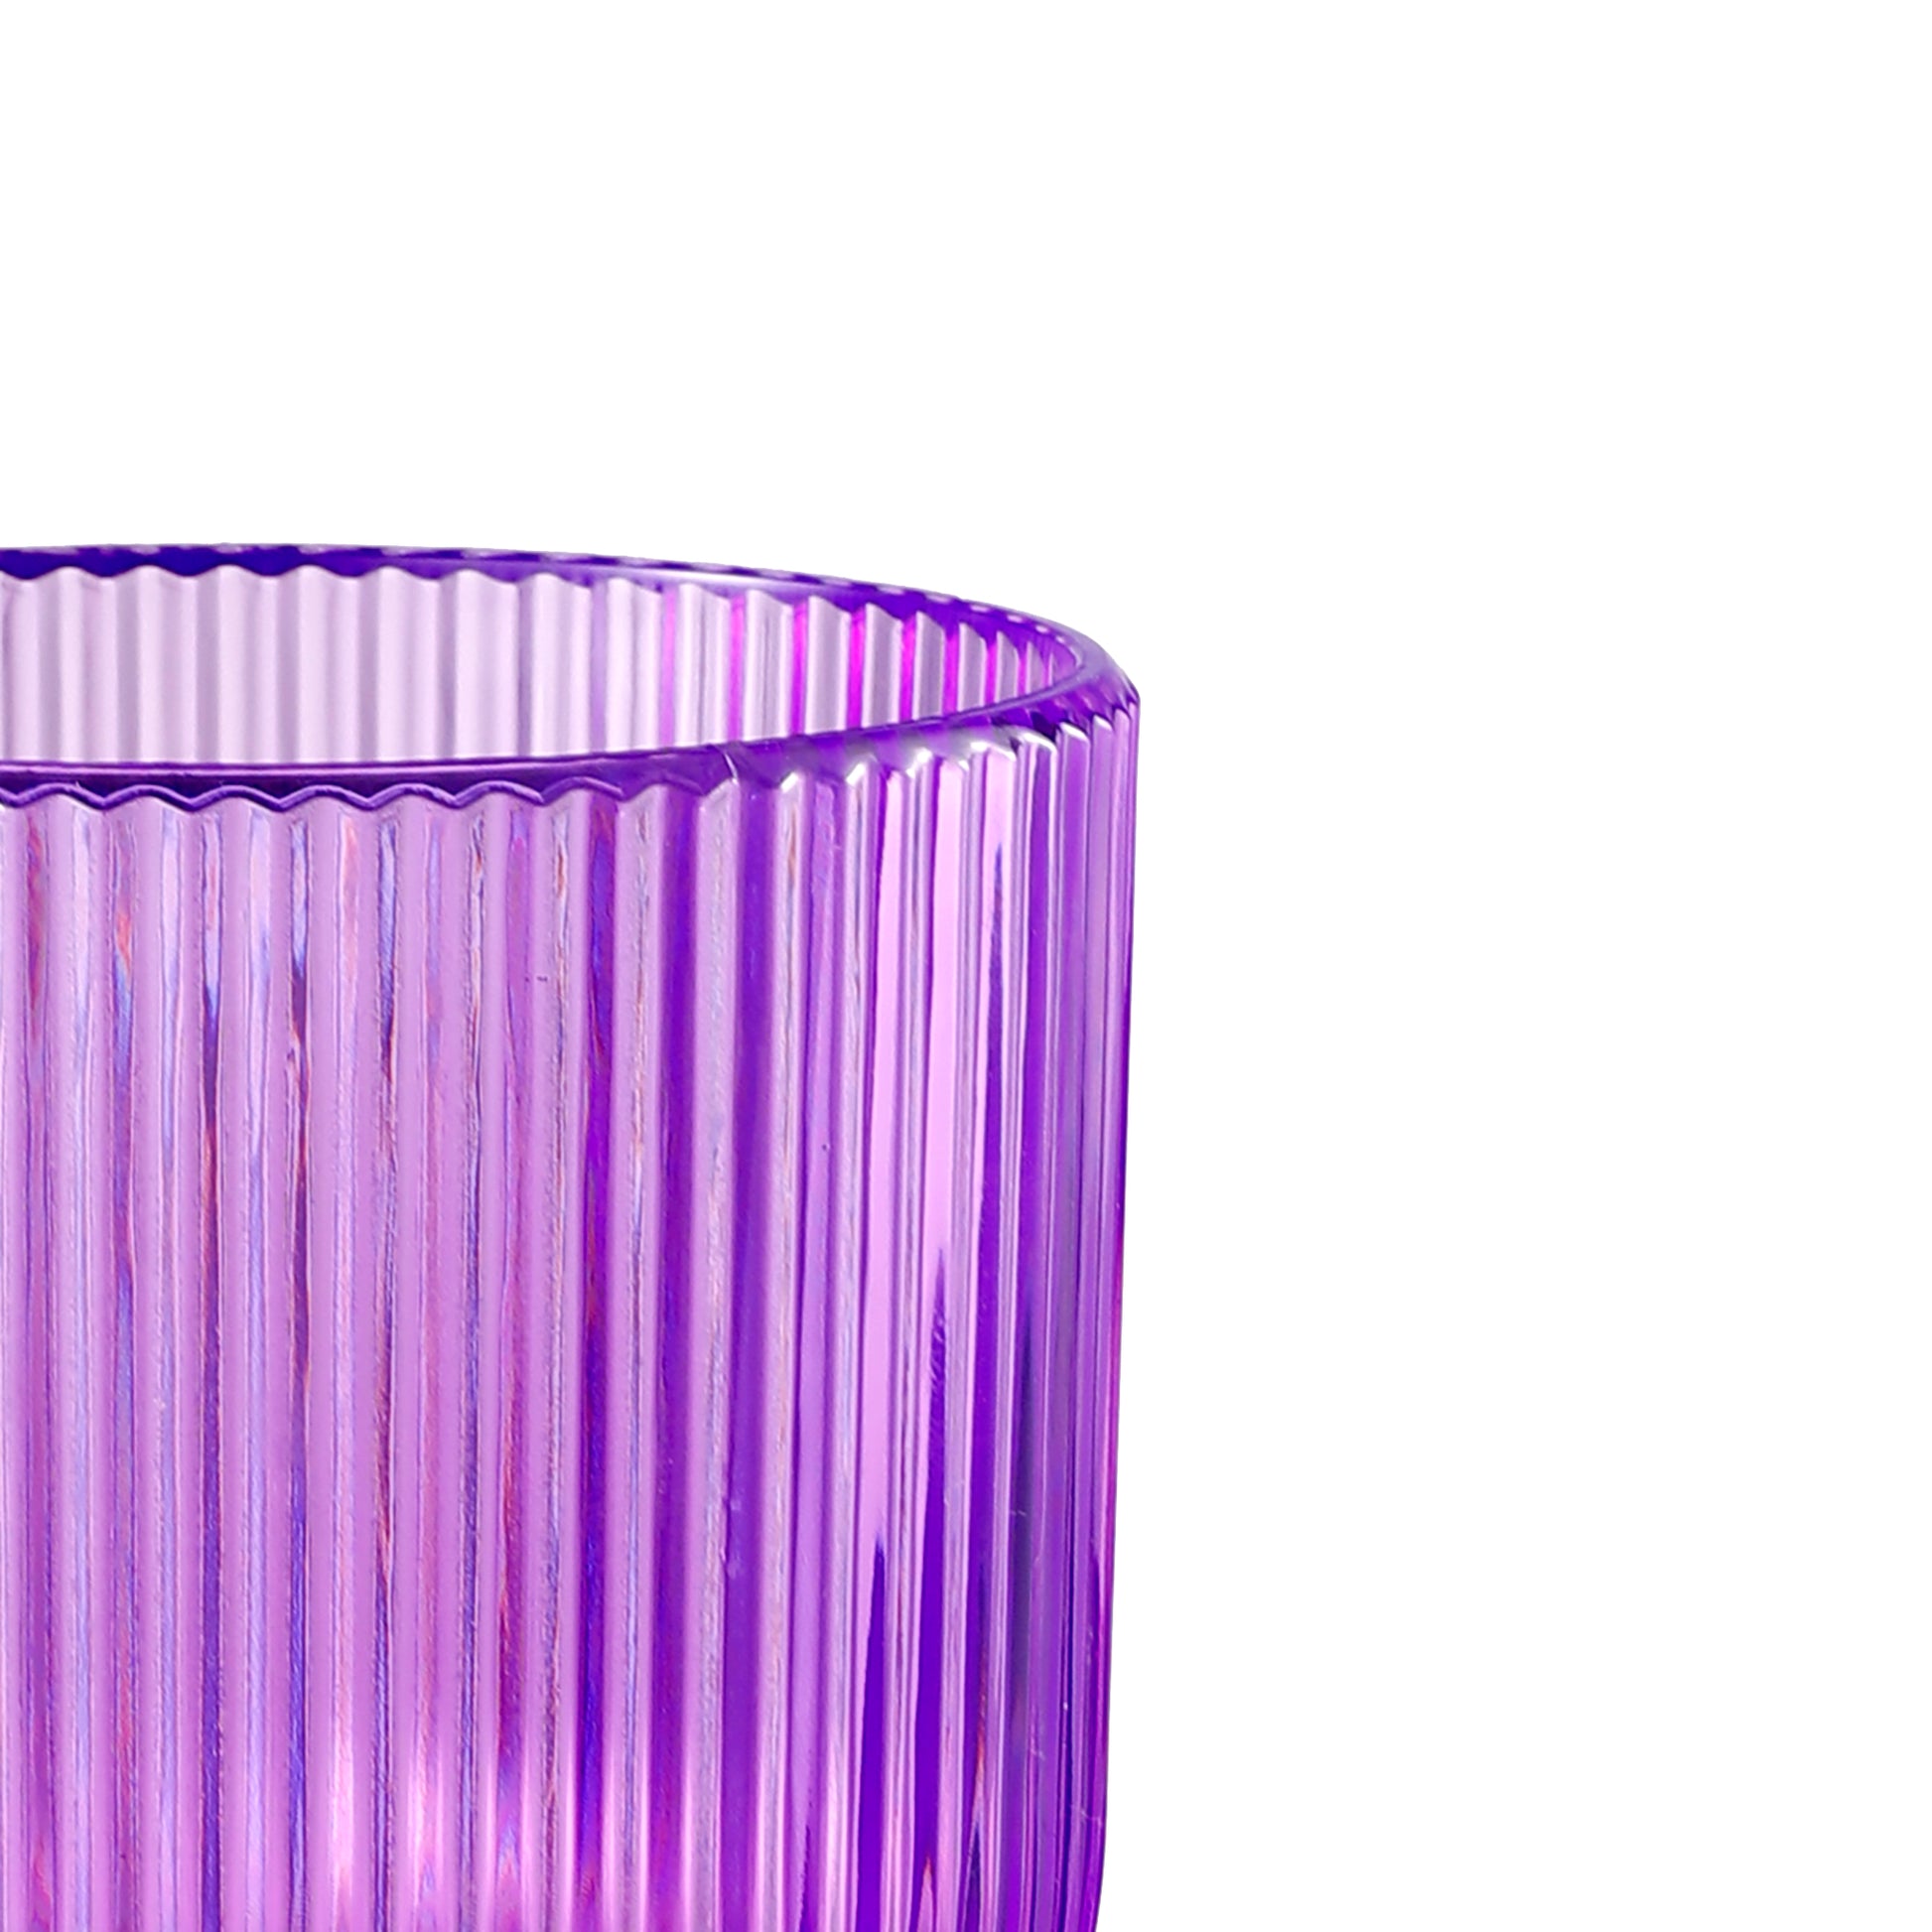 Lavender Acrylic 11oz Wine Goblets Ripple Design (6 pcs/pk)